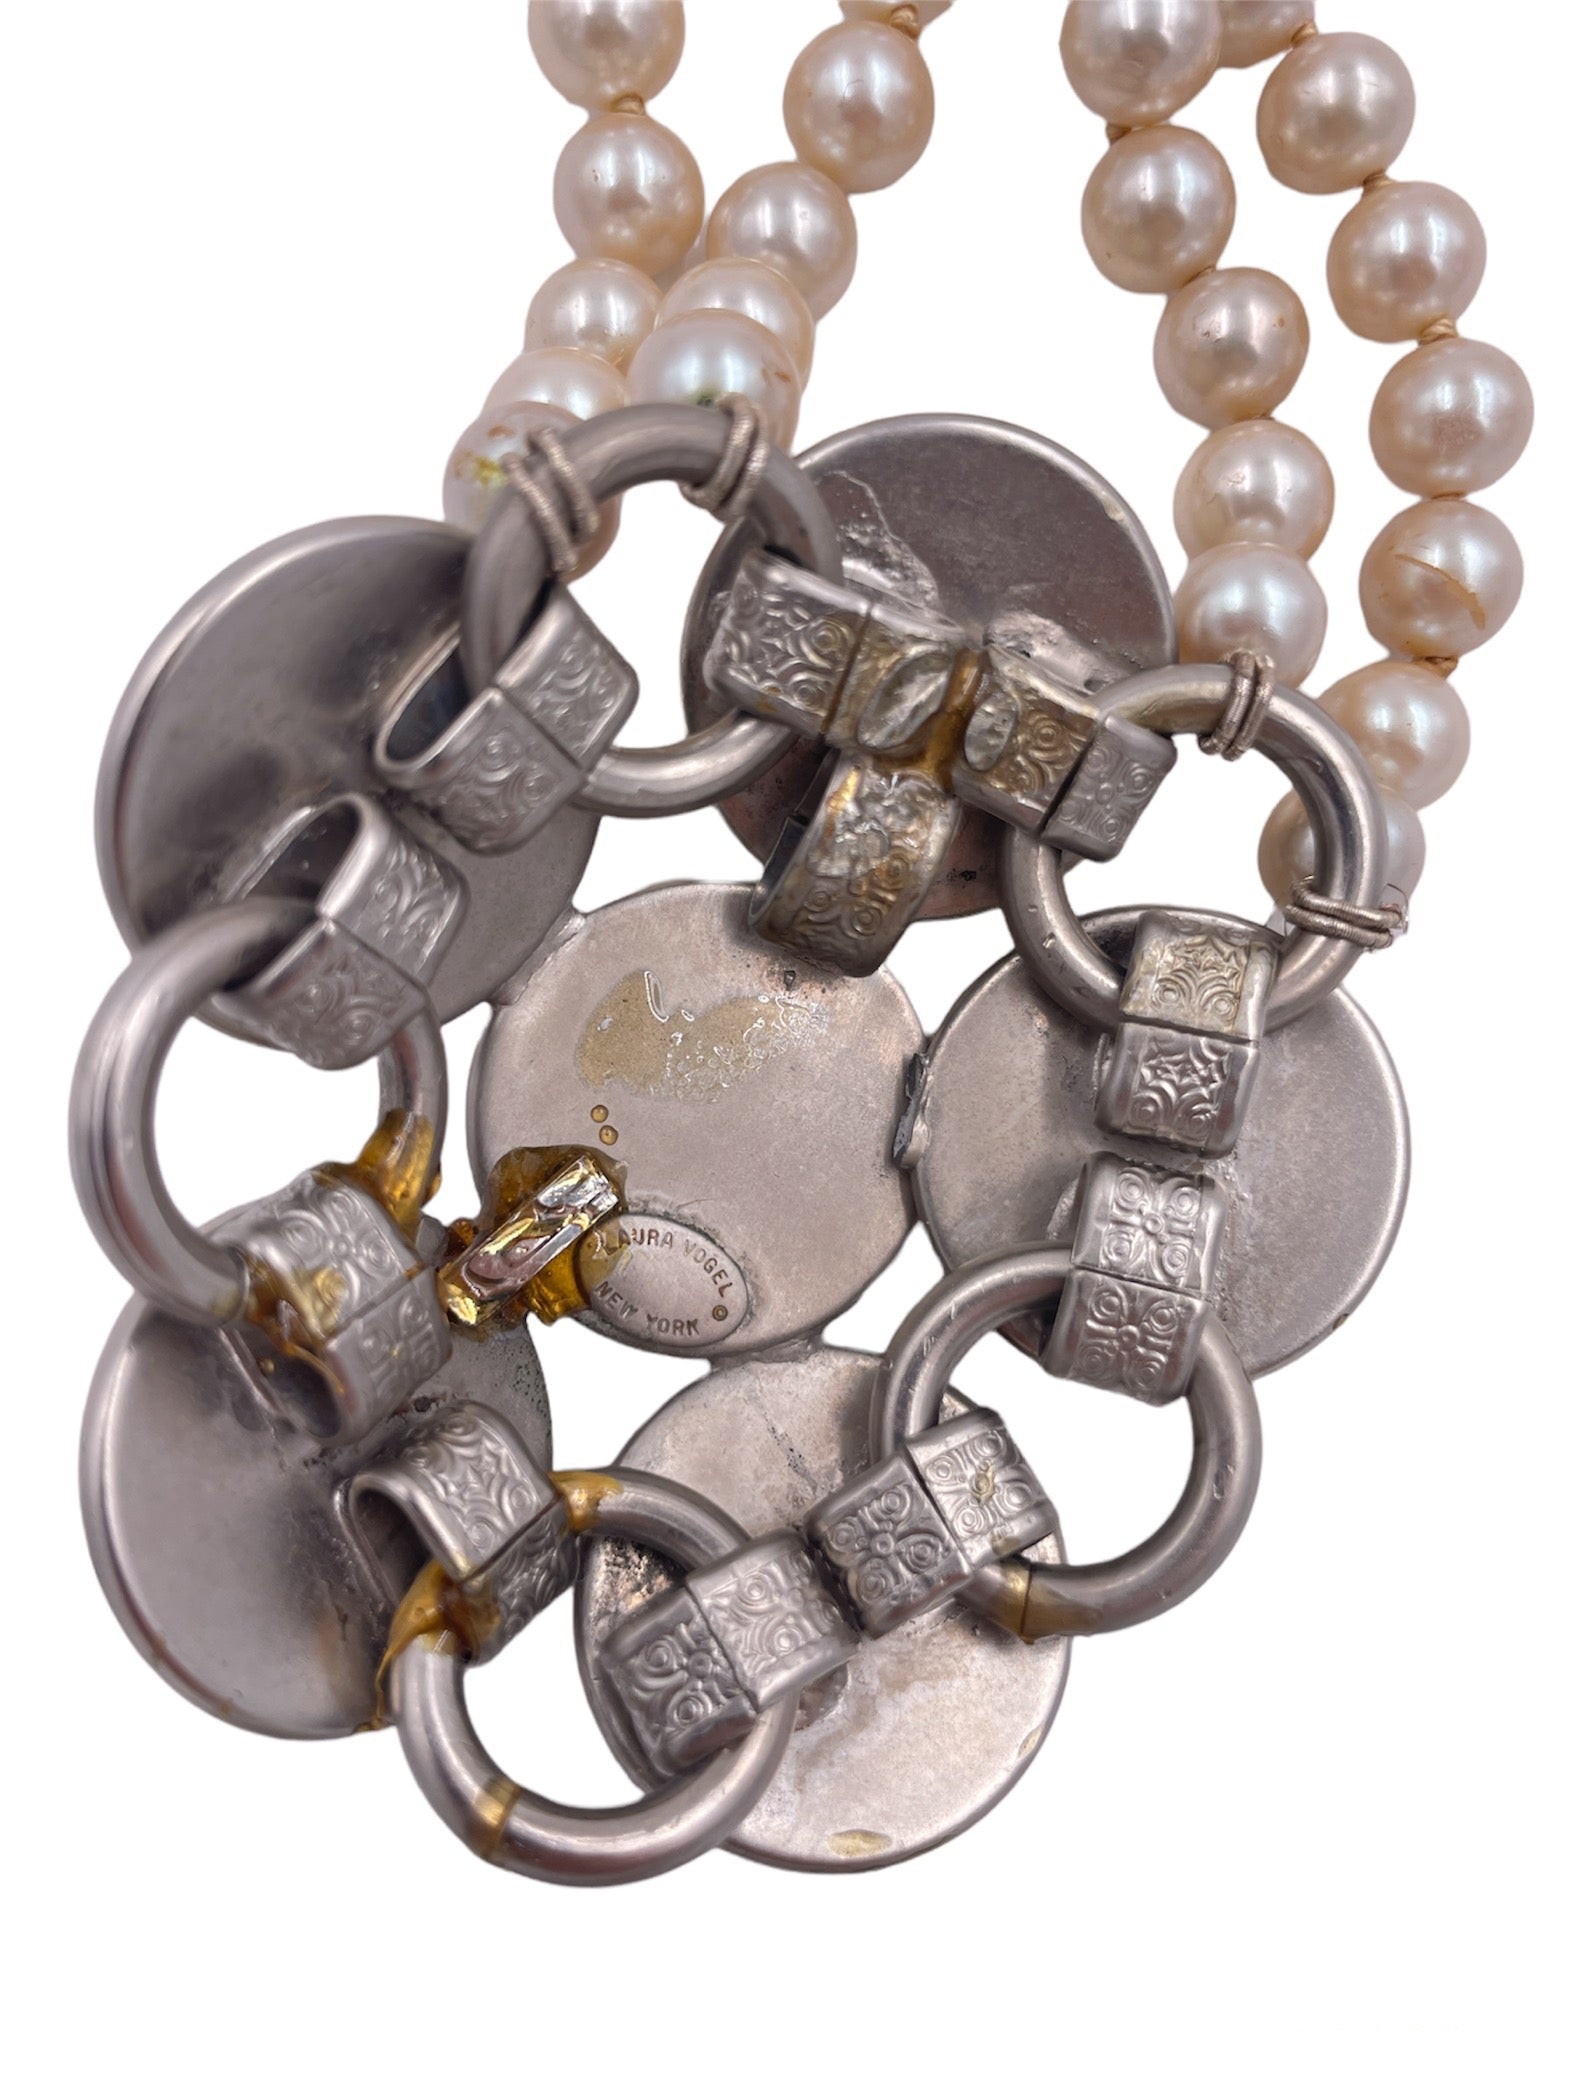 Laura Vogel Multi Pearl Necklace